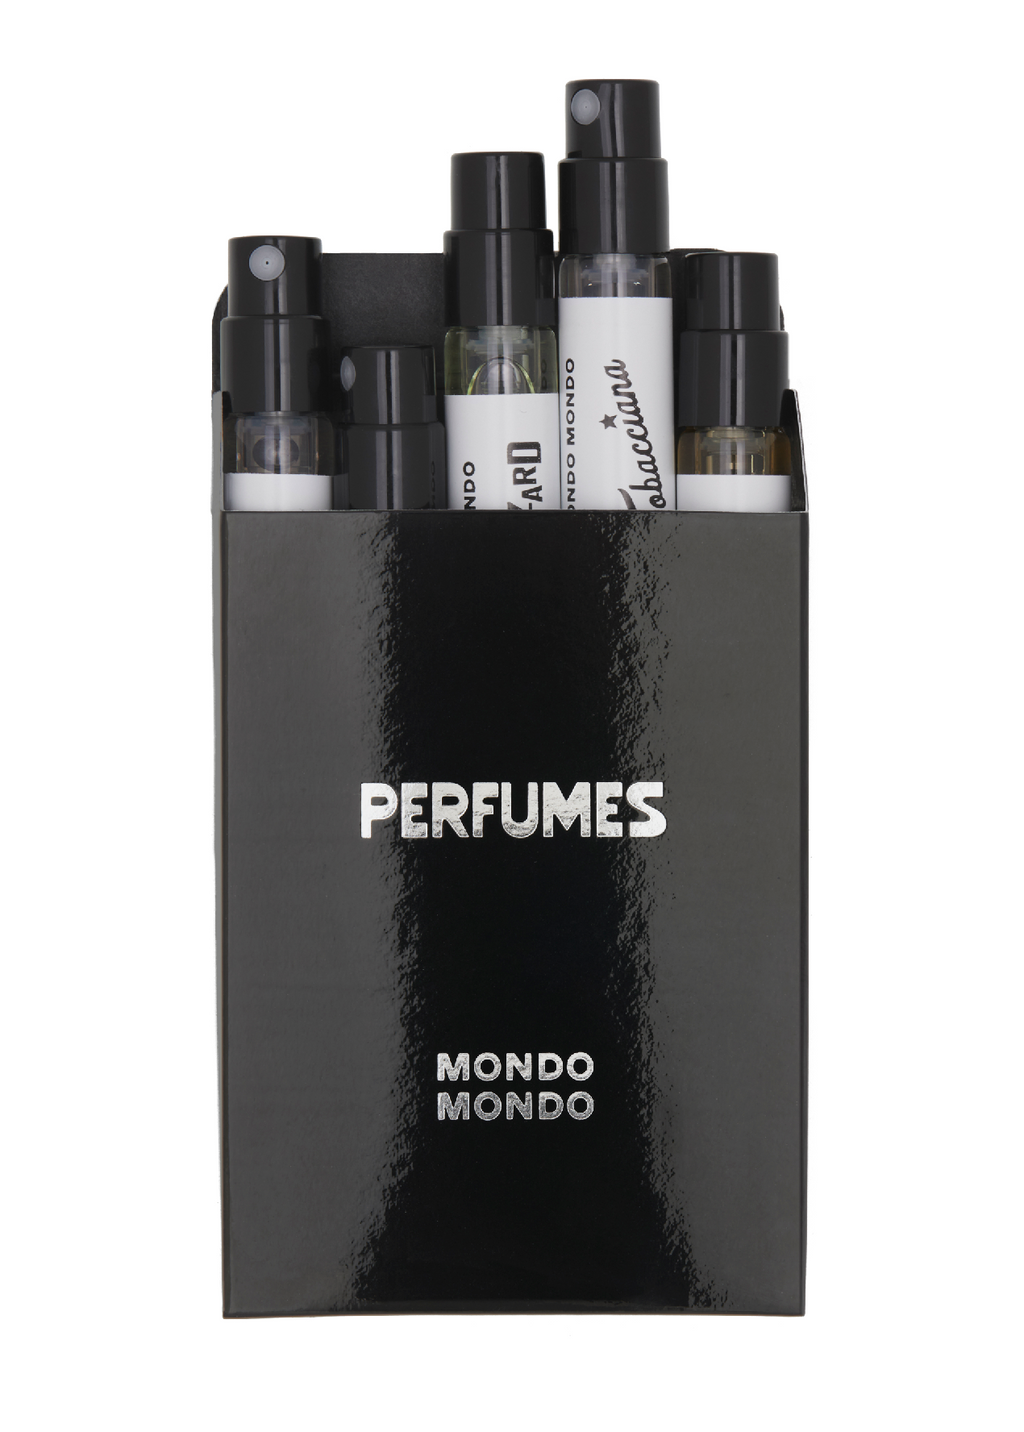 Perfume Sample Set – Mondo Mondo